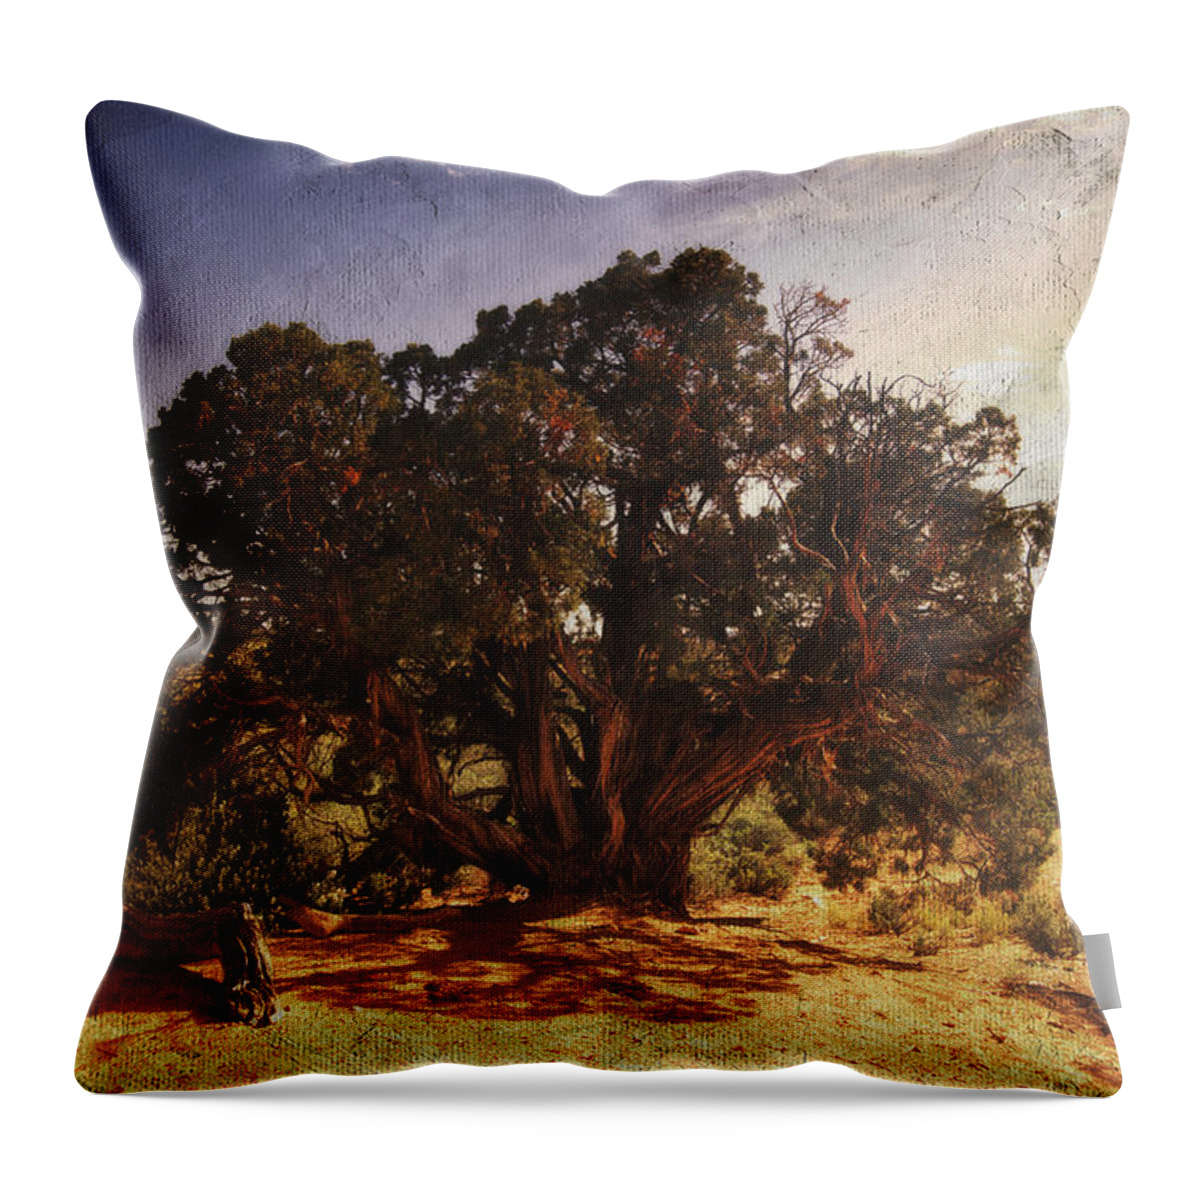 Juniper Tree Throw Pillow featuring the digital art Old Juniper Tree by Sandra Selle Rodriguez